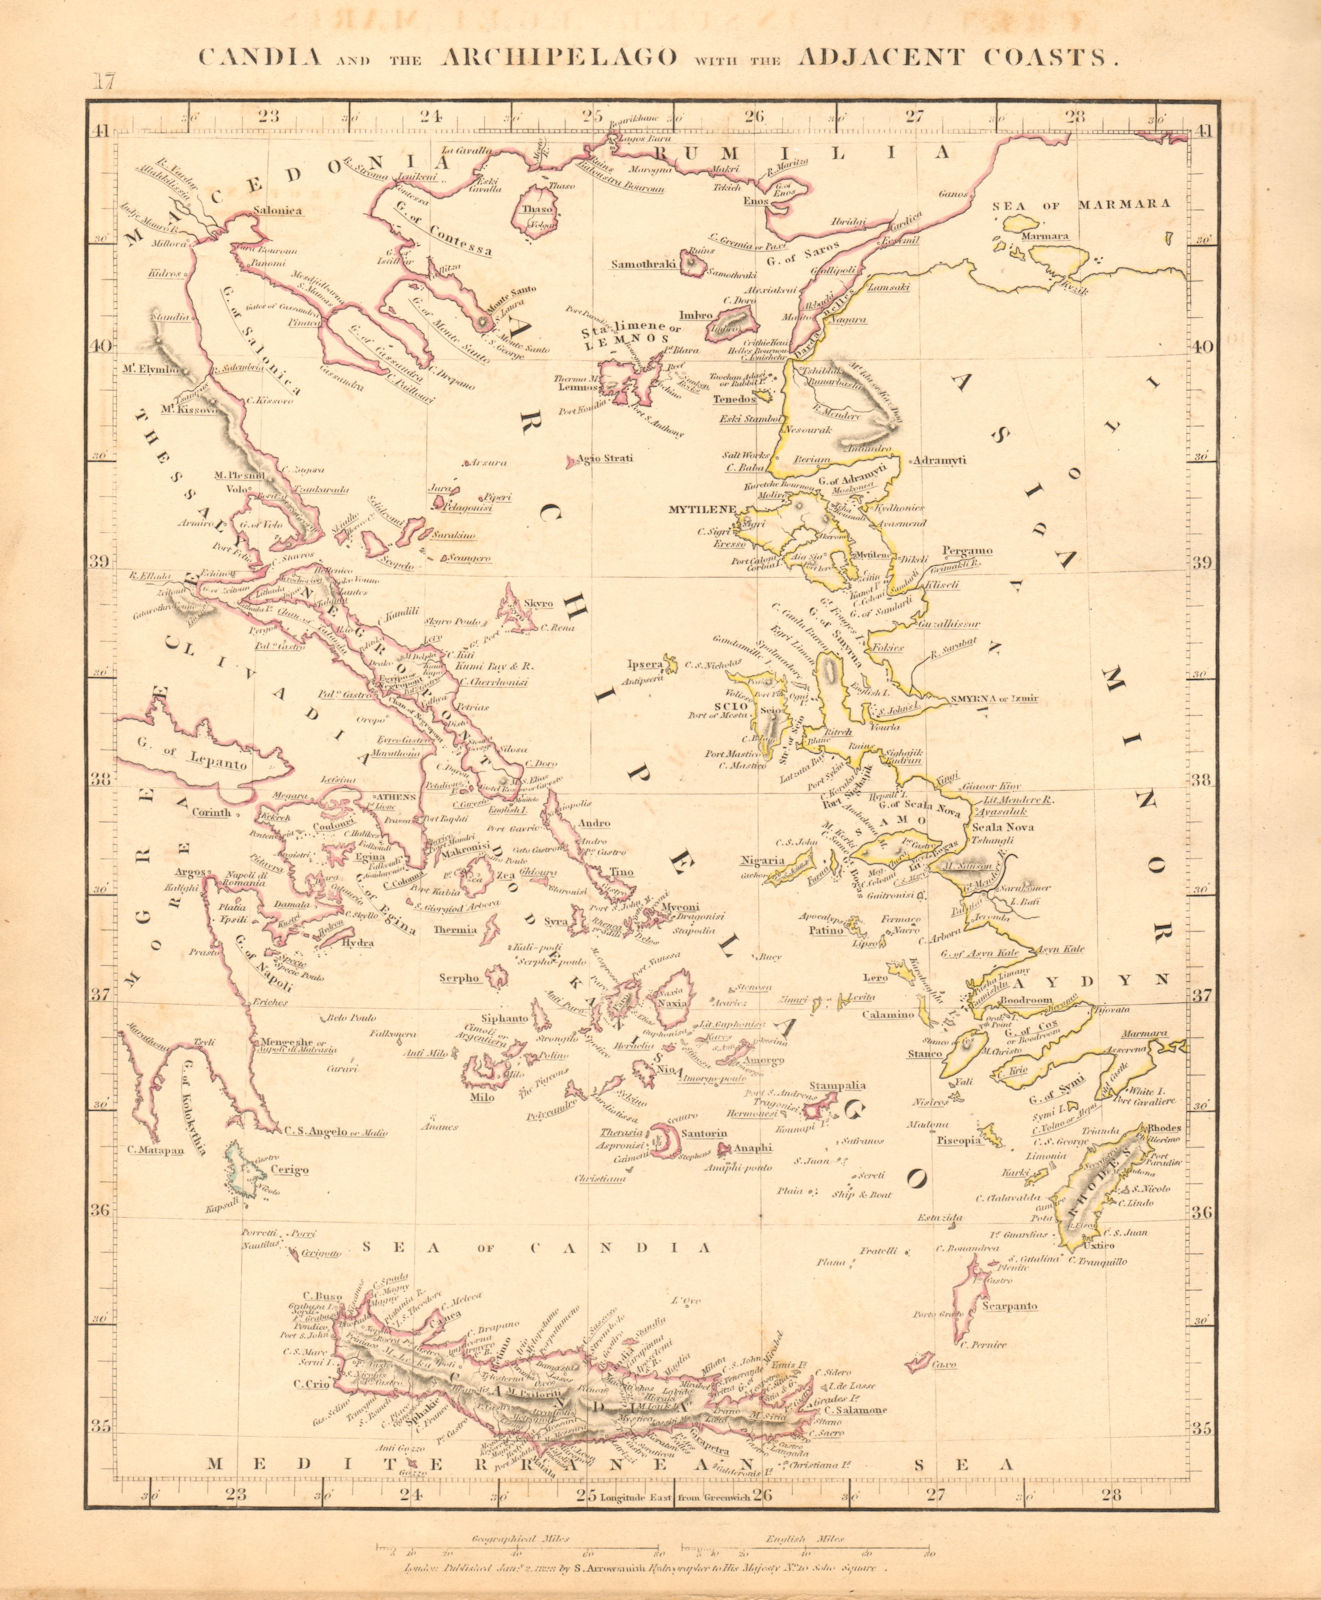 AEGEAN ISLANDS. Crete Cyclades Dodecanese Sporades. Greece. ARROWSMITH 1828 map